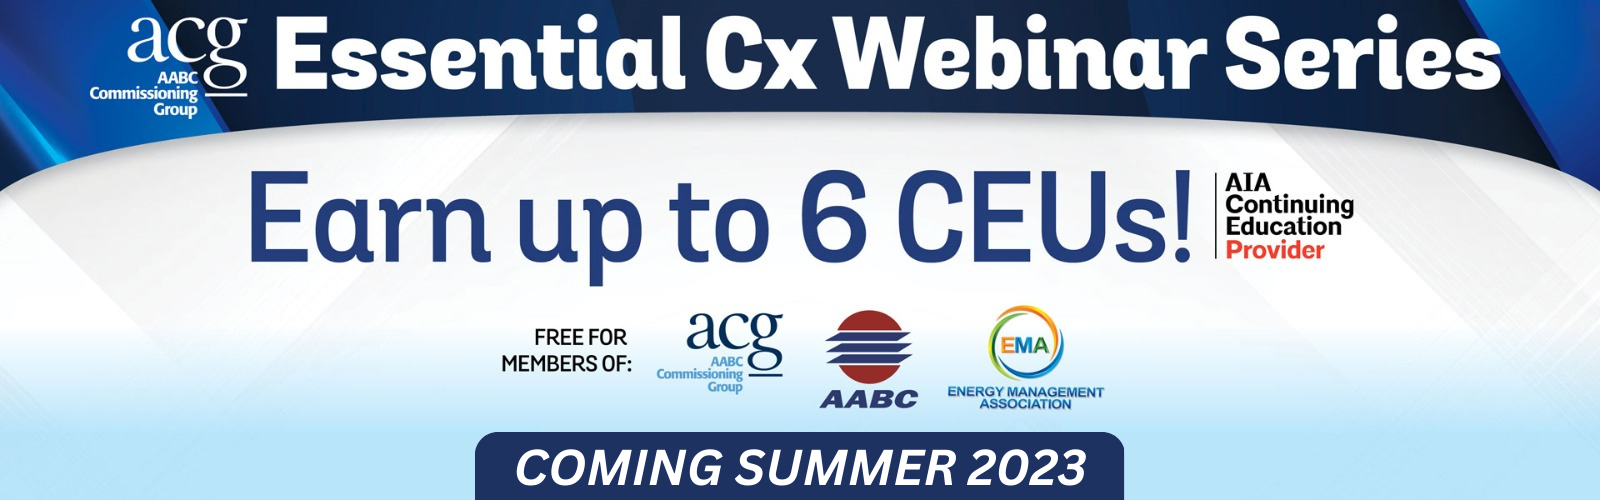 ACG Essential Cx Webinar Series are back in Summer 2023